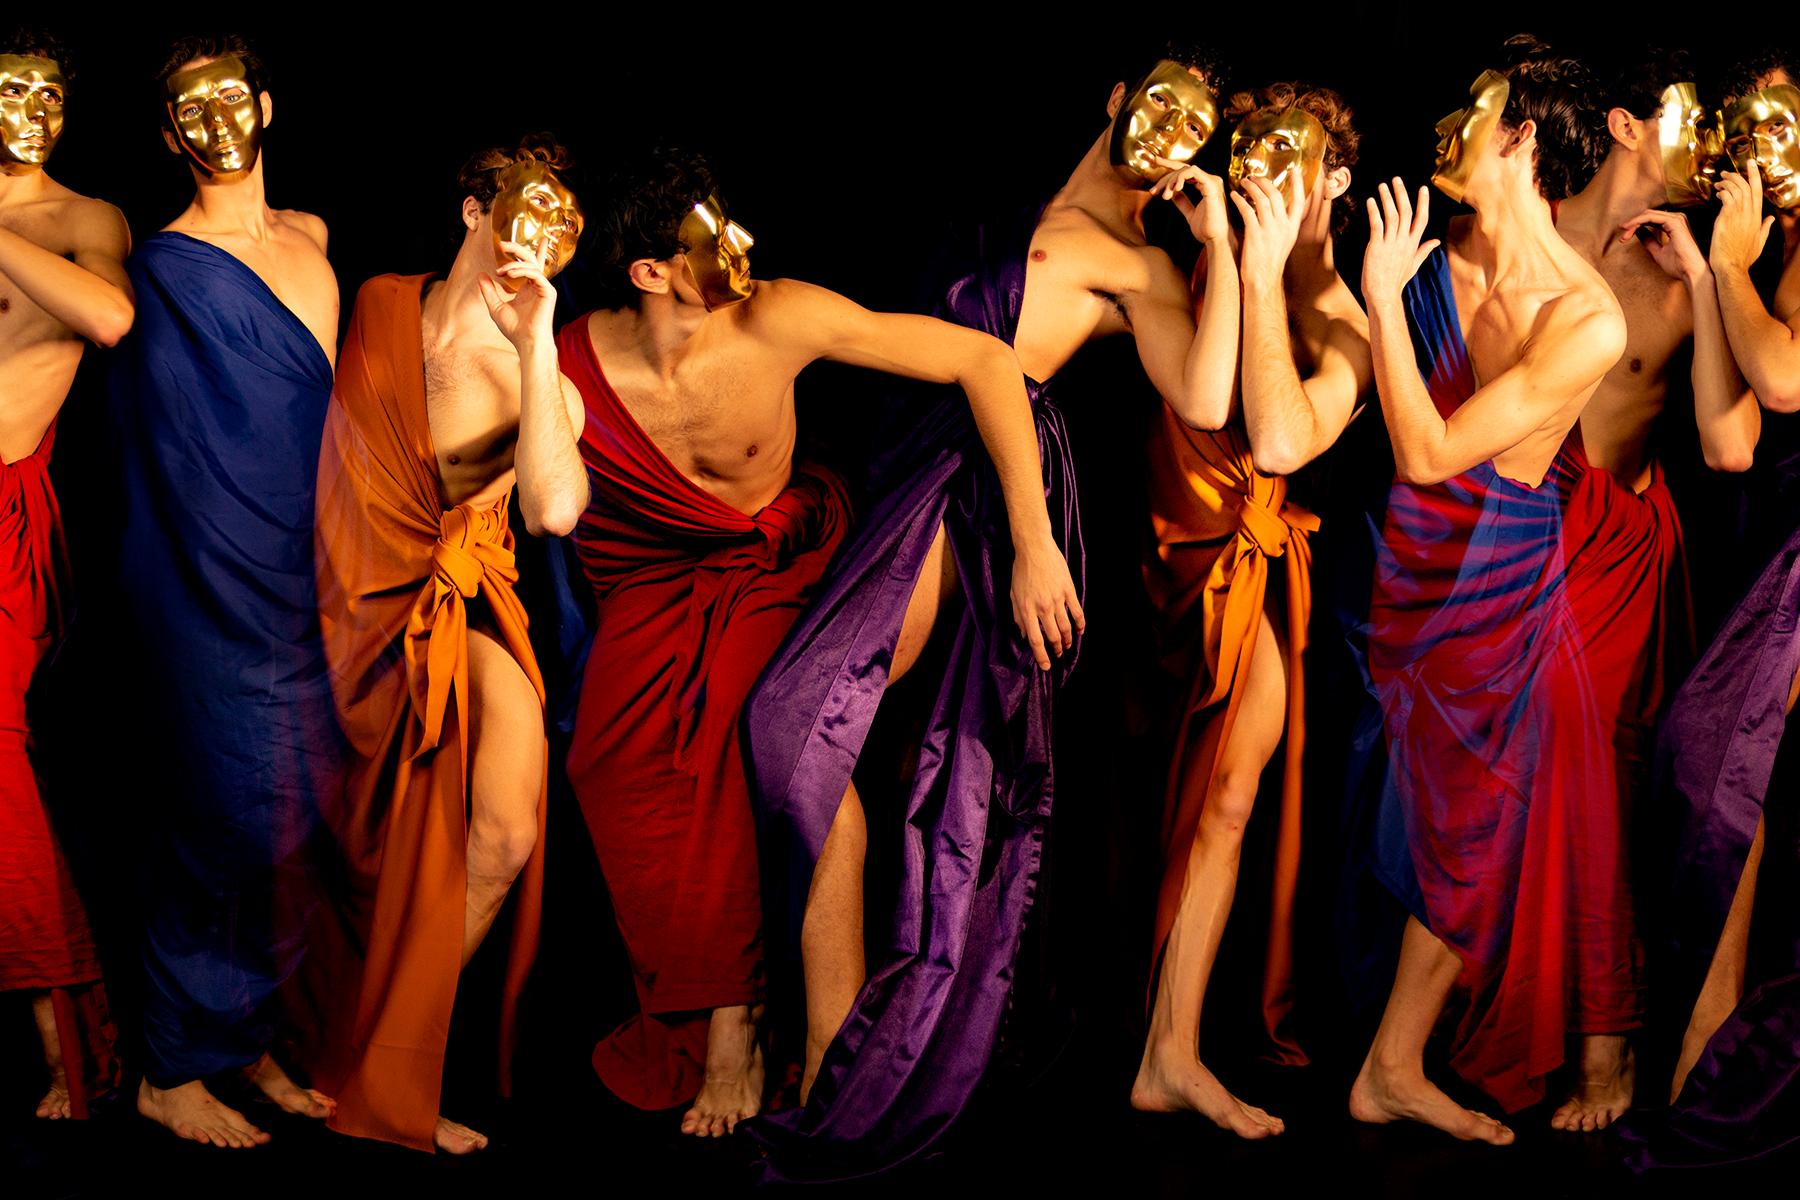 Ricky Cohete Figurative Photograph - El mensaje. From The series danza de las naranjas. Figurative Color Photograph